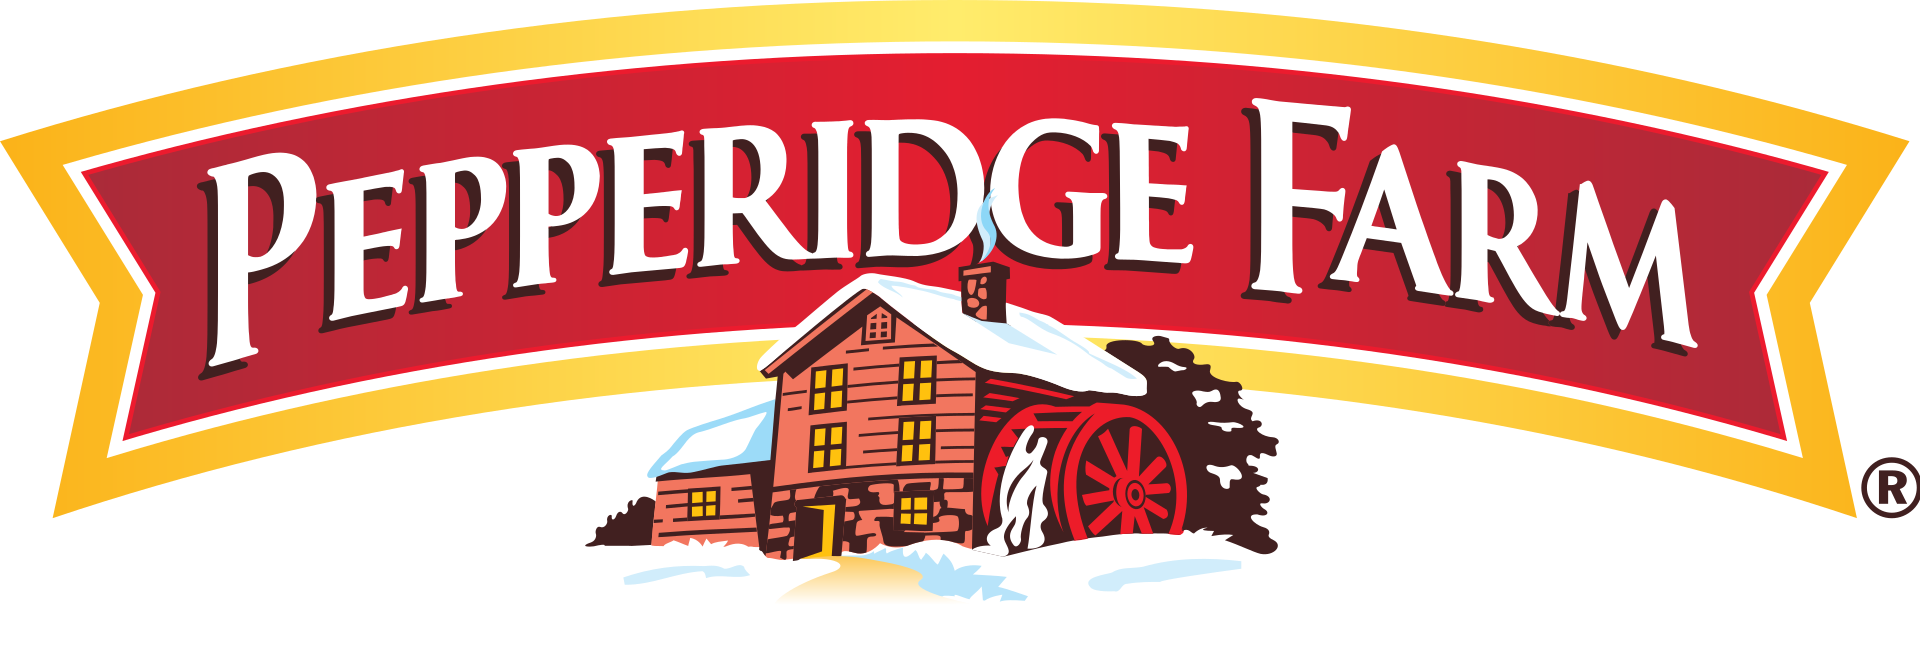 Pepperidge Farm Brand Logo